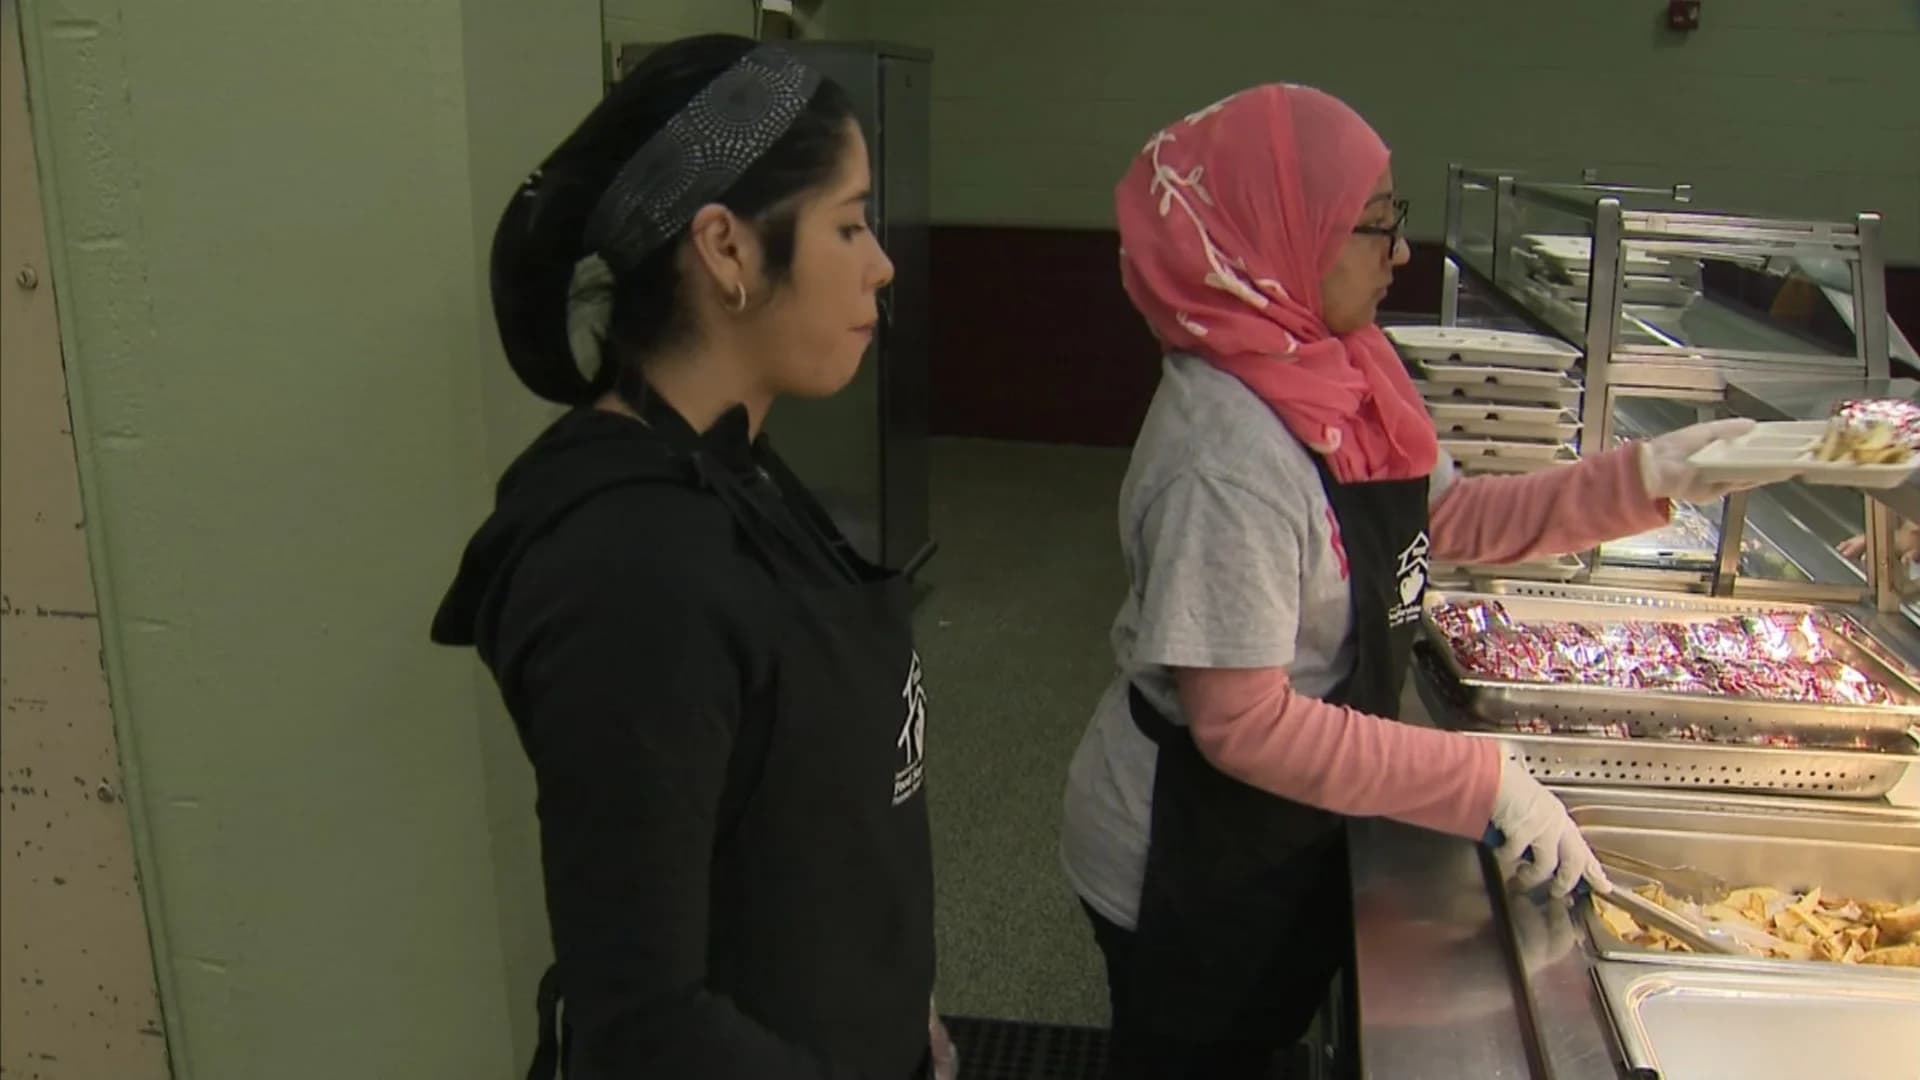 2 Paterson schools to launch pilot program to serve Halal food